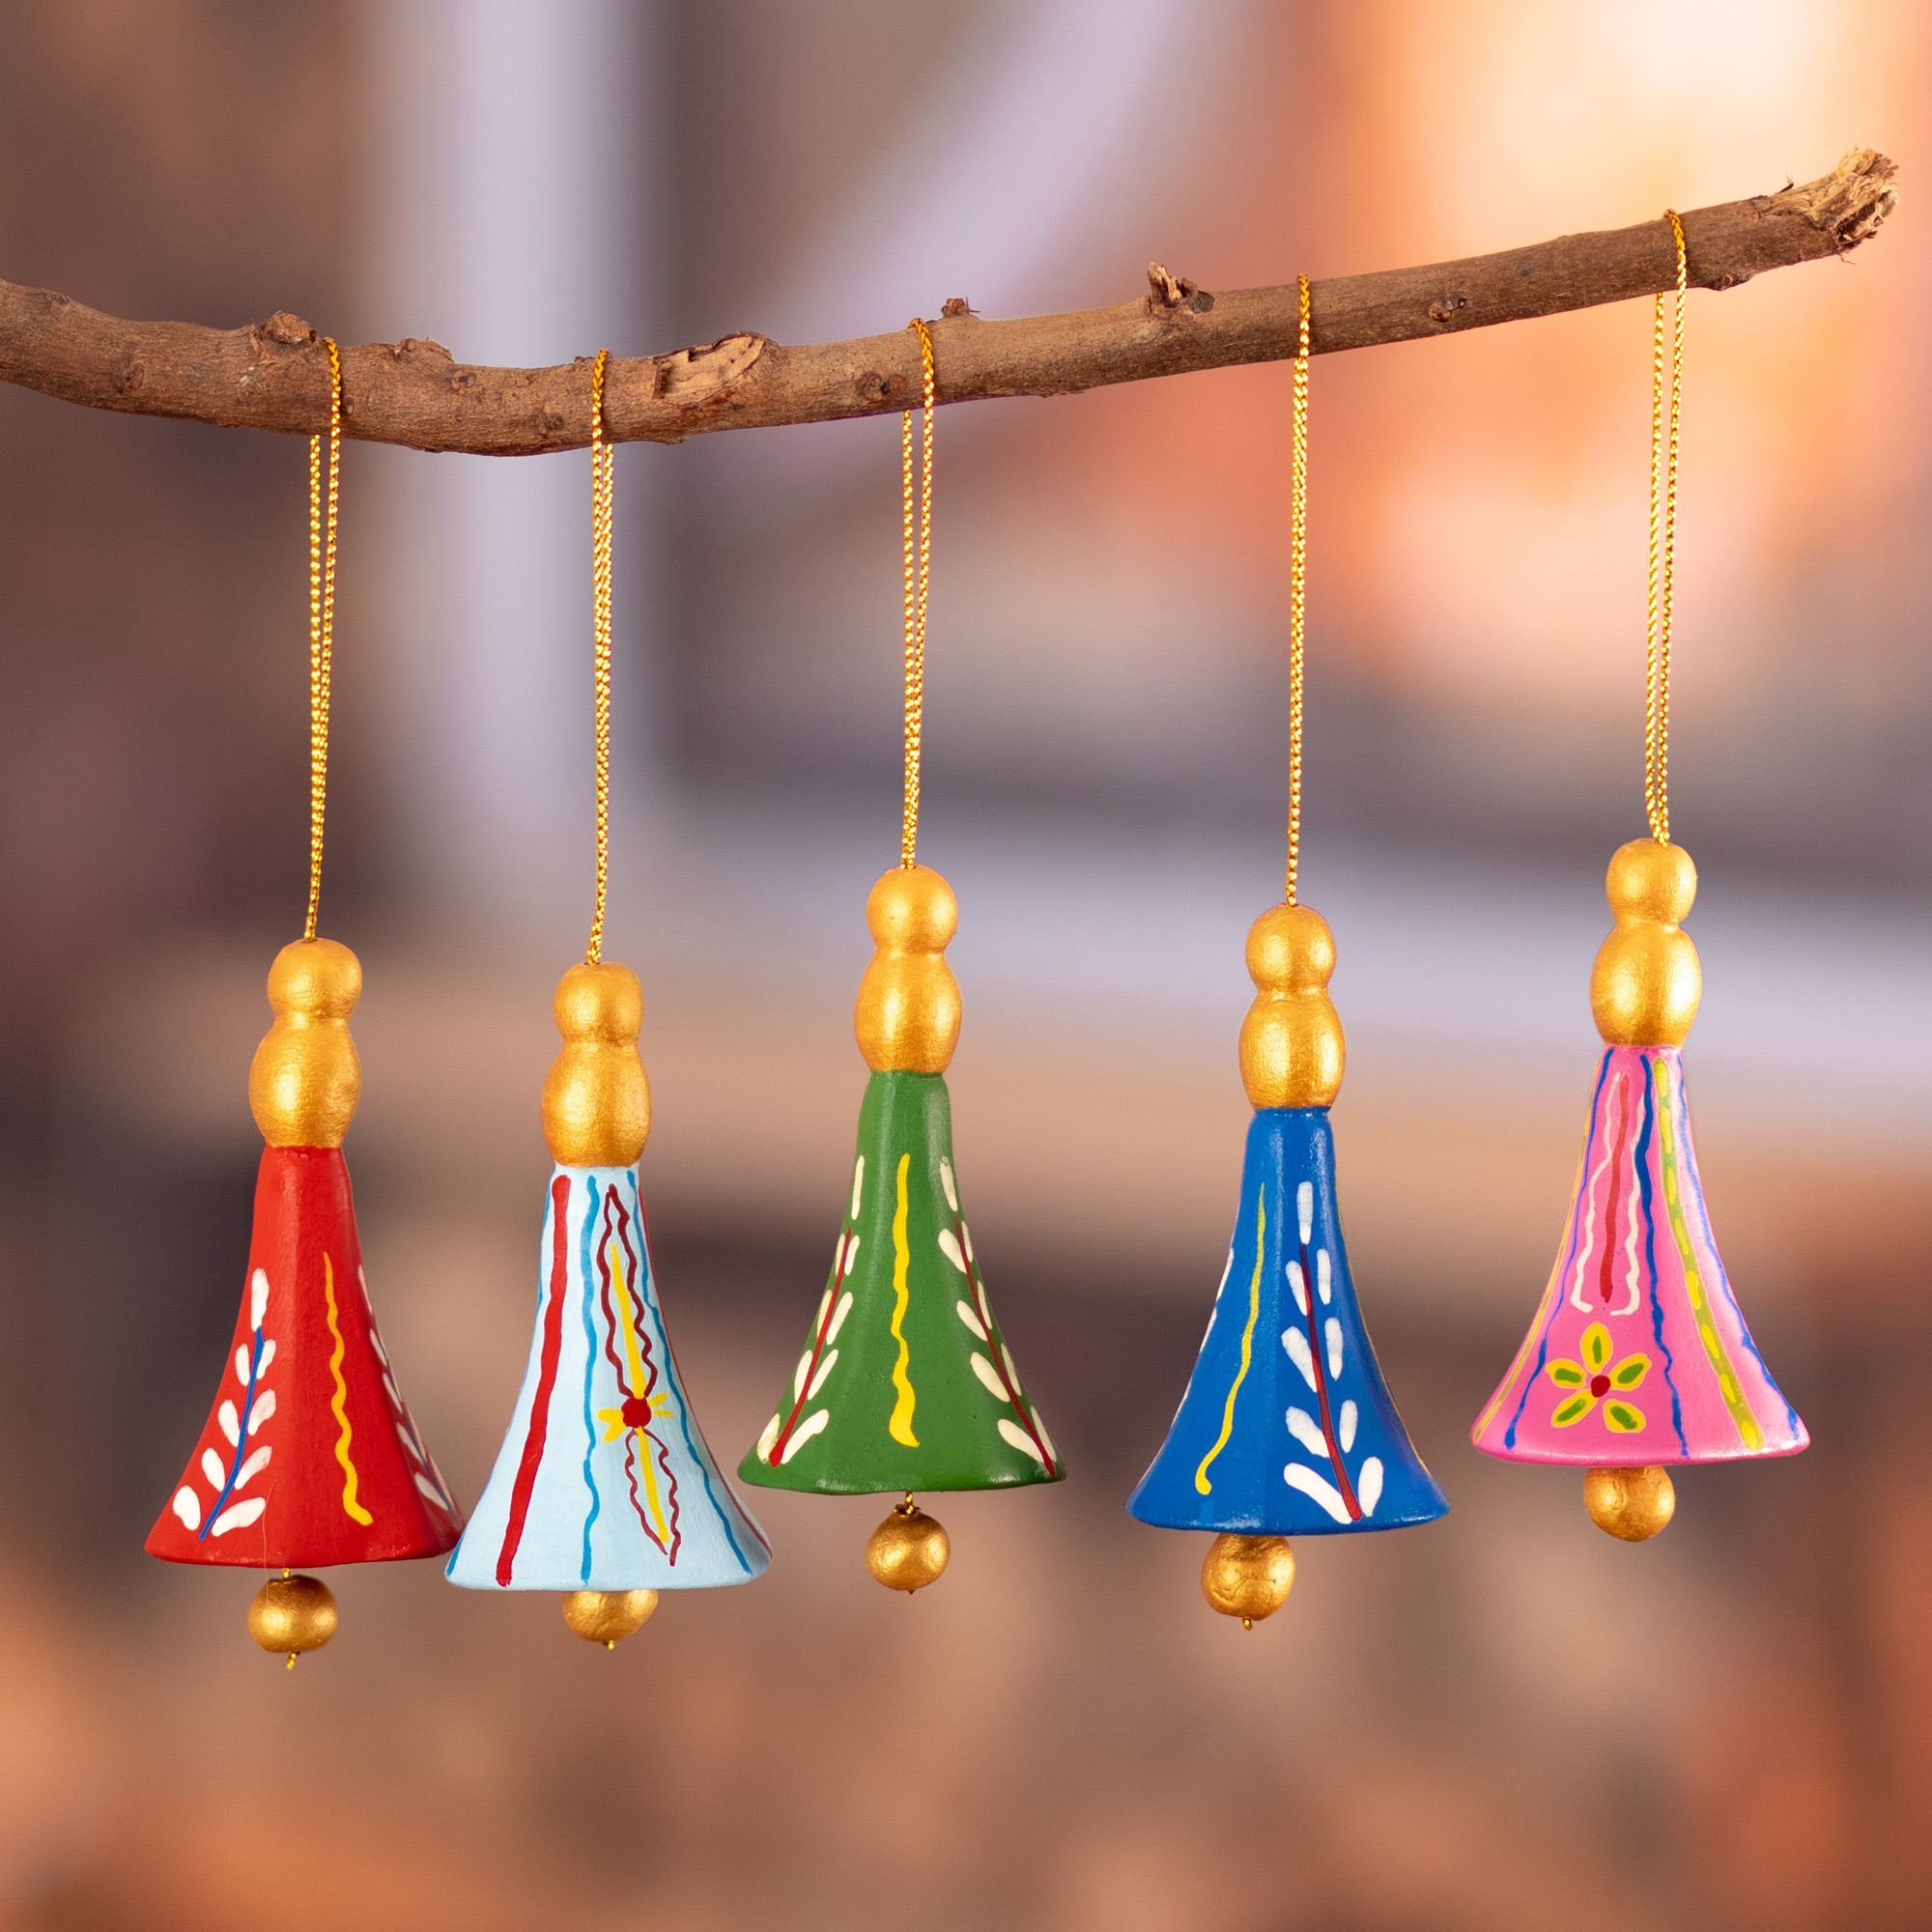 angels Glazed ceramic Ornament or candle; multiple color options bells